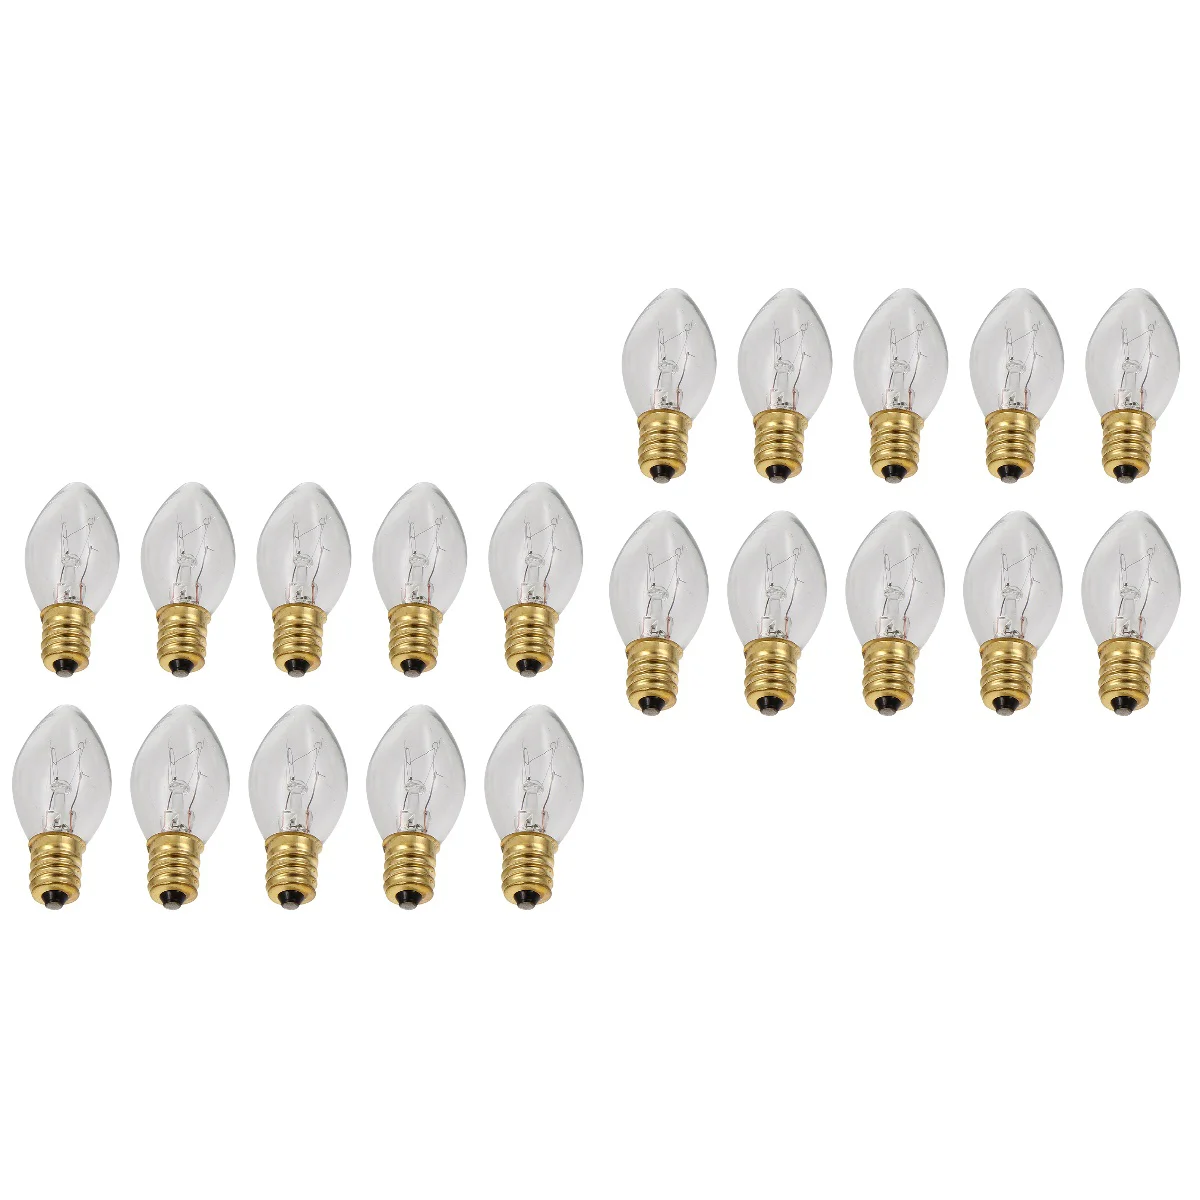 

20 Pcs 120V 7W Bulb Practical Large Screw LED Light Bulb Compatible with E12